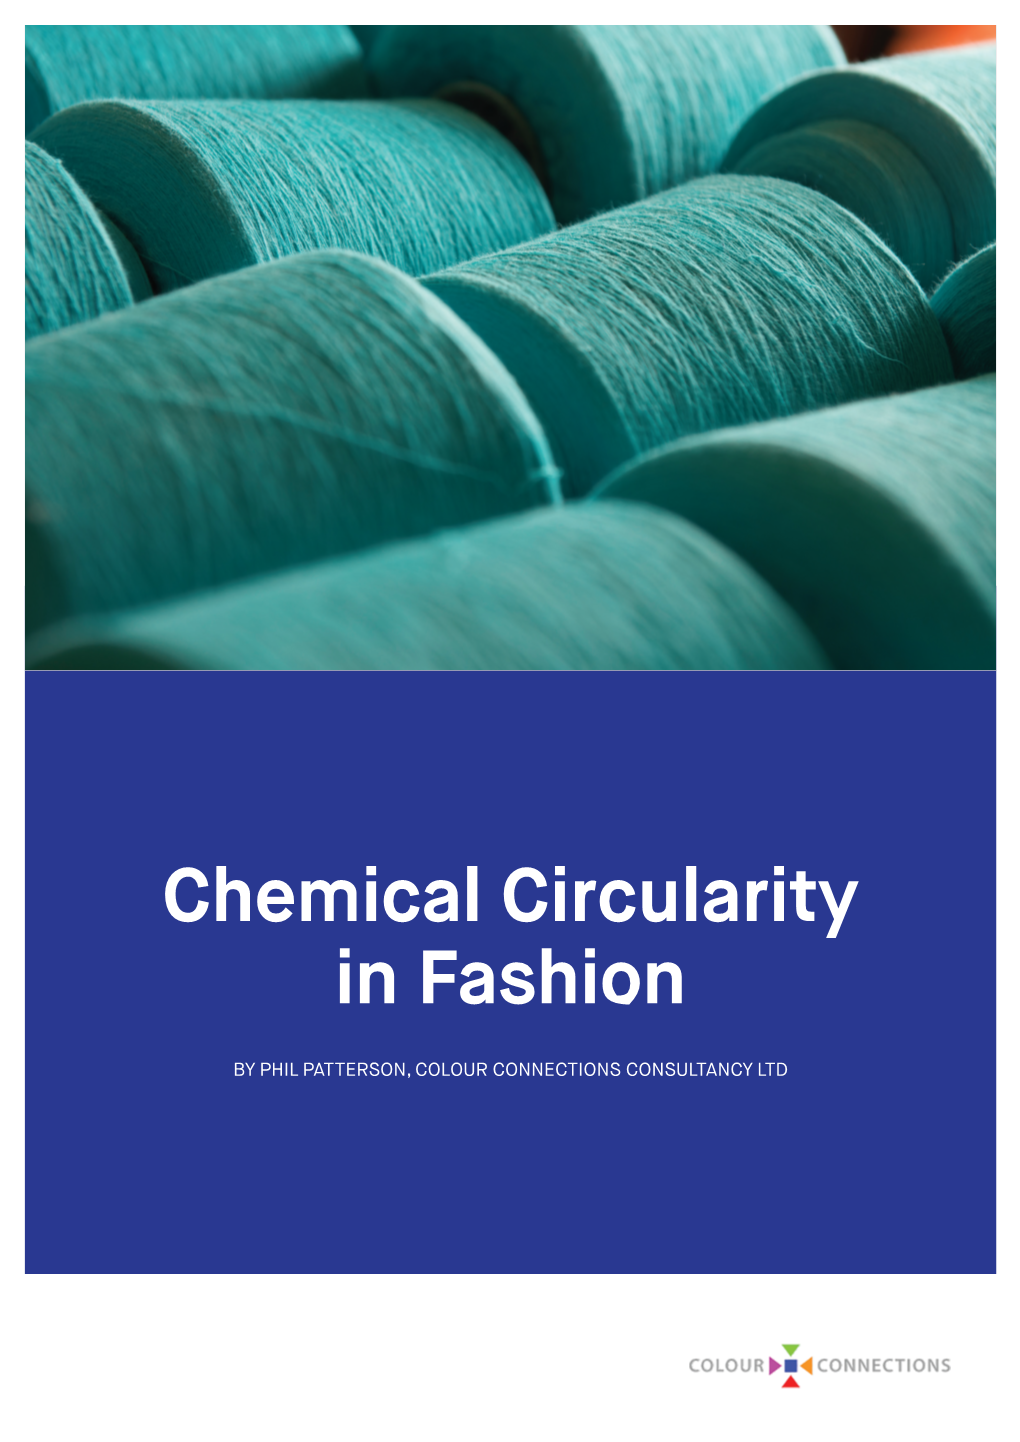 Chemical Circularity in Fashion